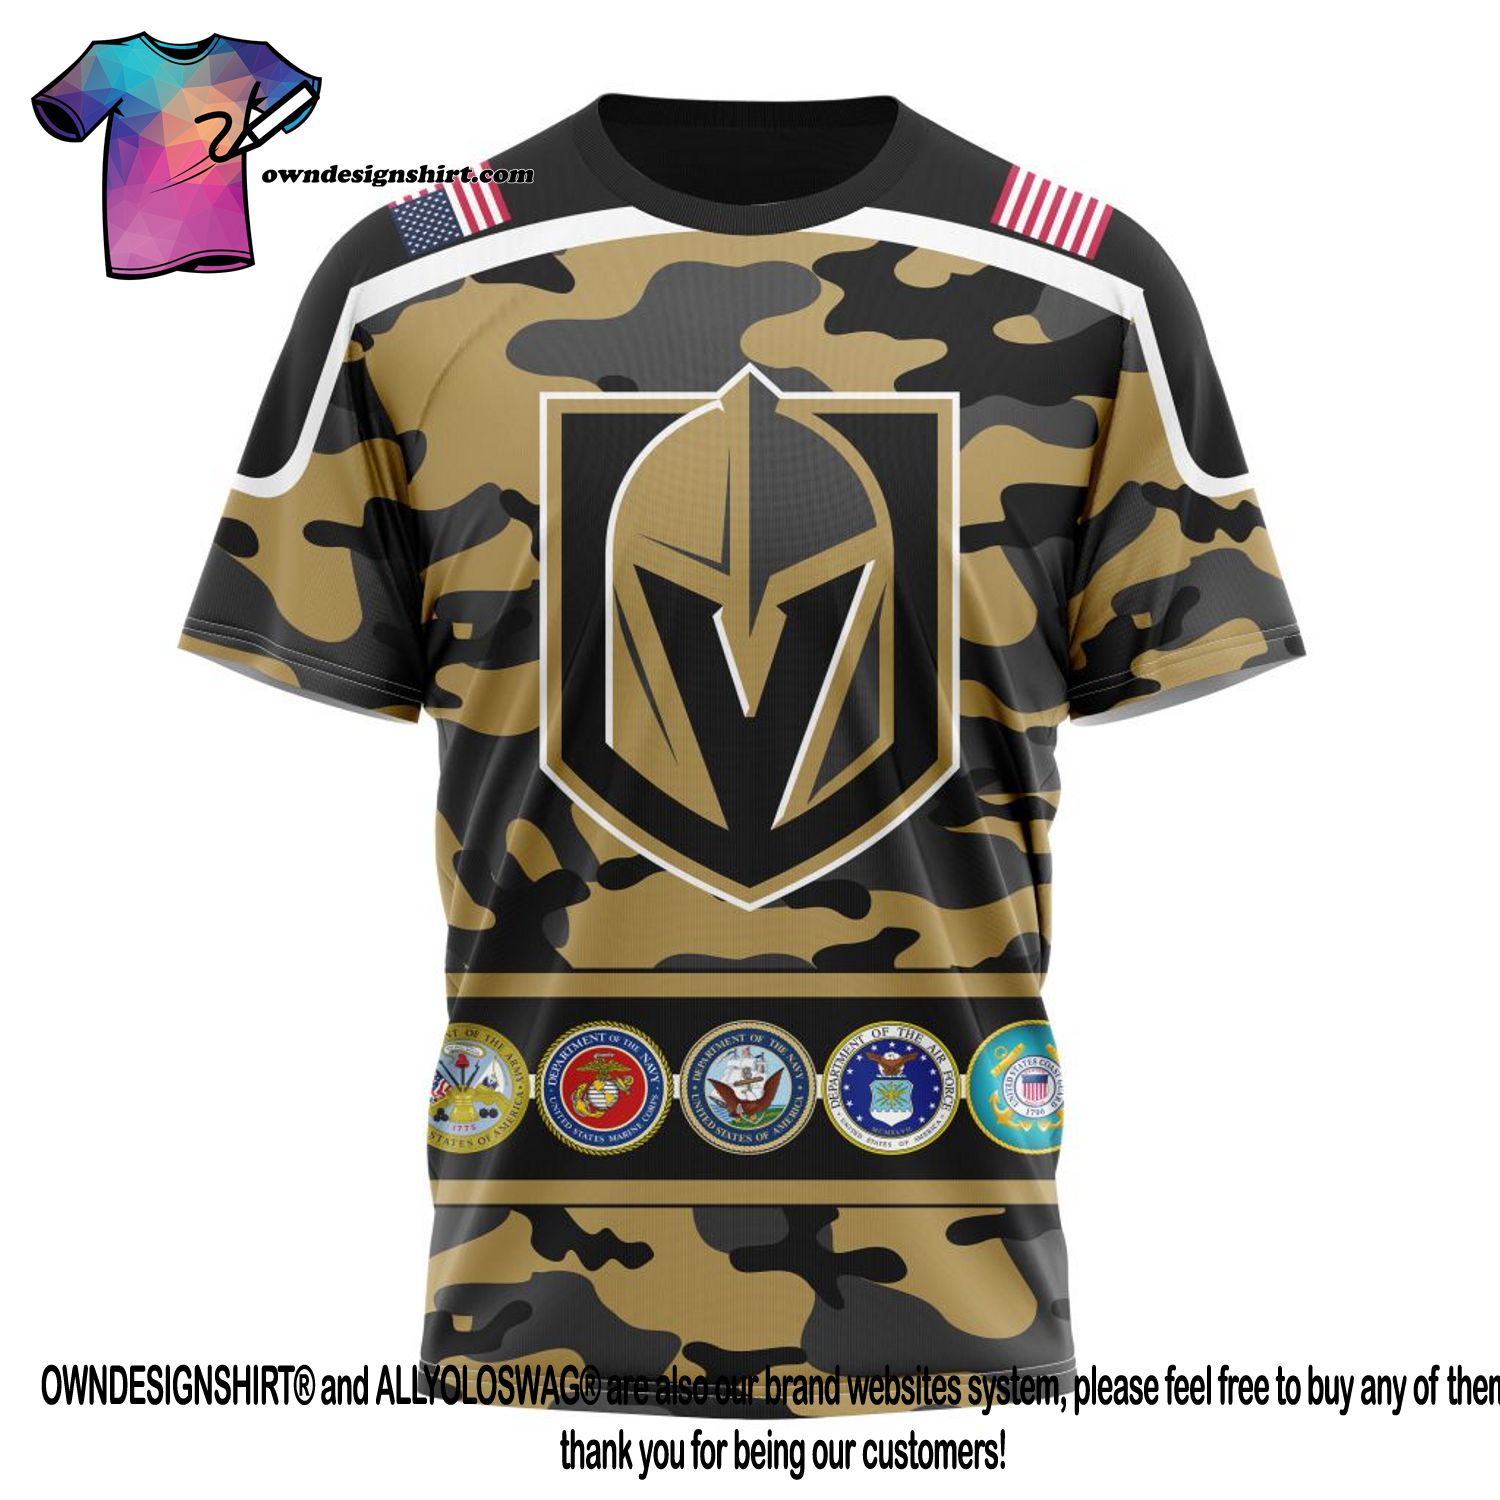 Vegas Golden Knights Tank Tops, Knights Sleeveless Shirts, Tanks